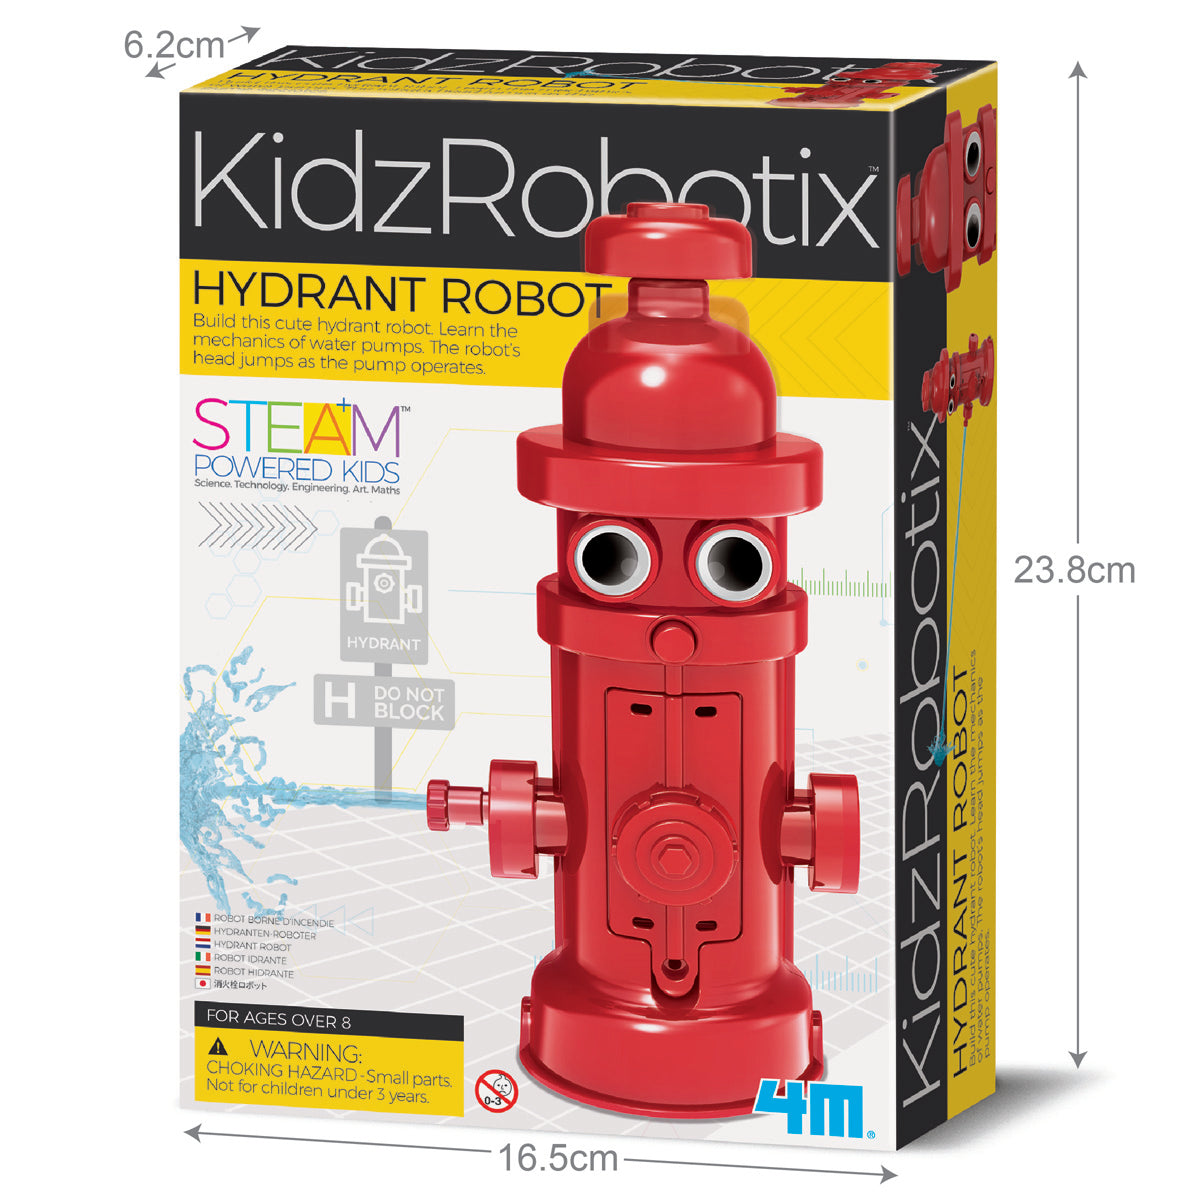 KidzRobotix Hydrant Robot